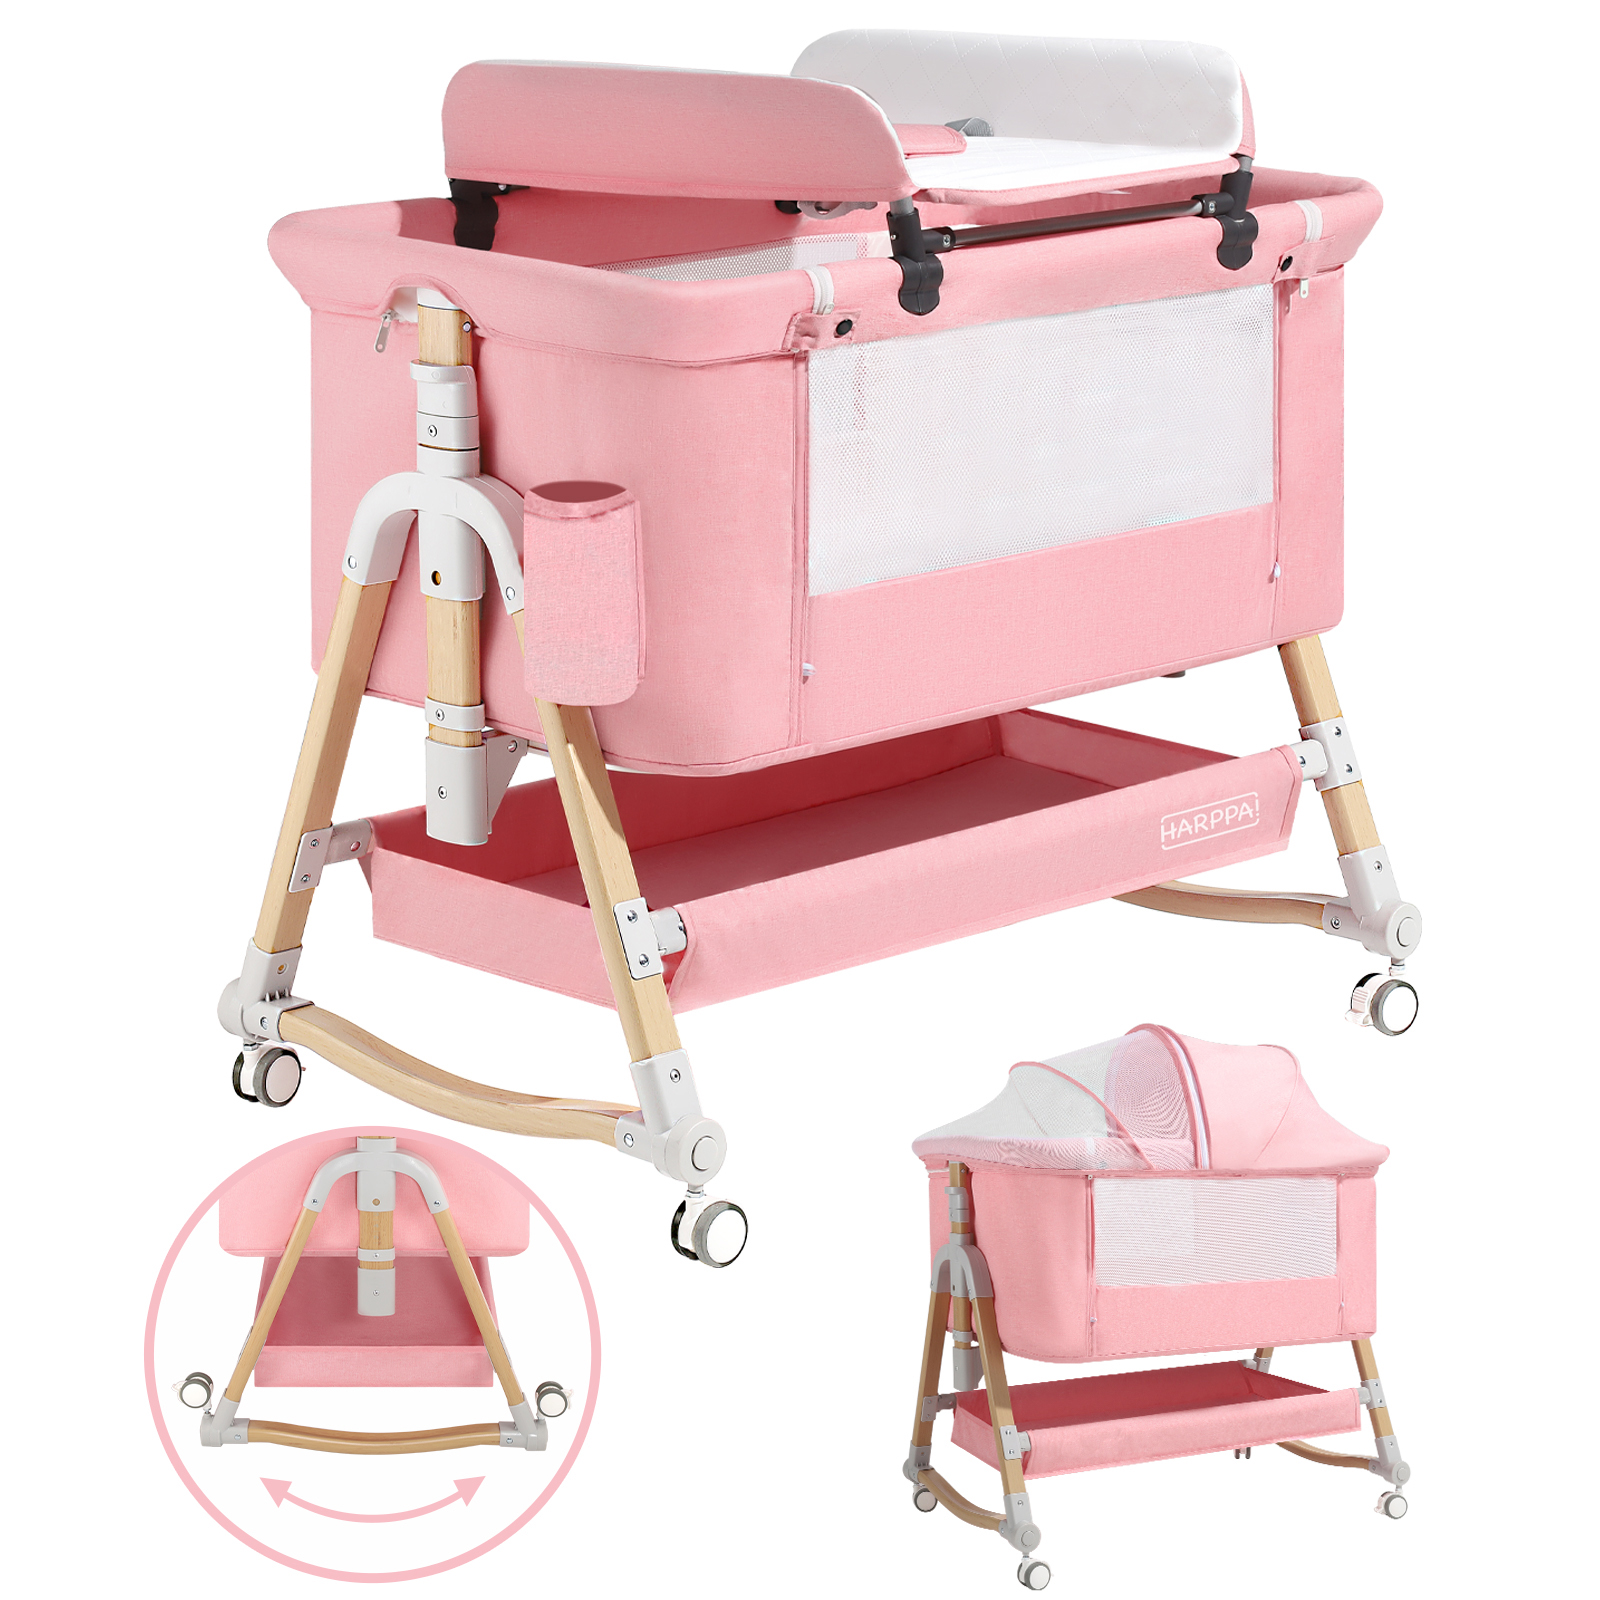 HARPPA 4 in 1 Baby Bassinet Bedside Sleeper, Height Adjustable, Easy Folding, Pink - image 1 of 8